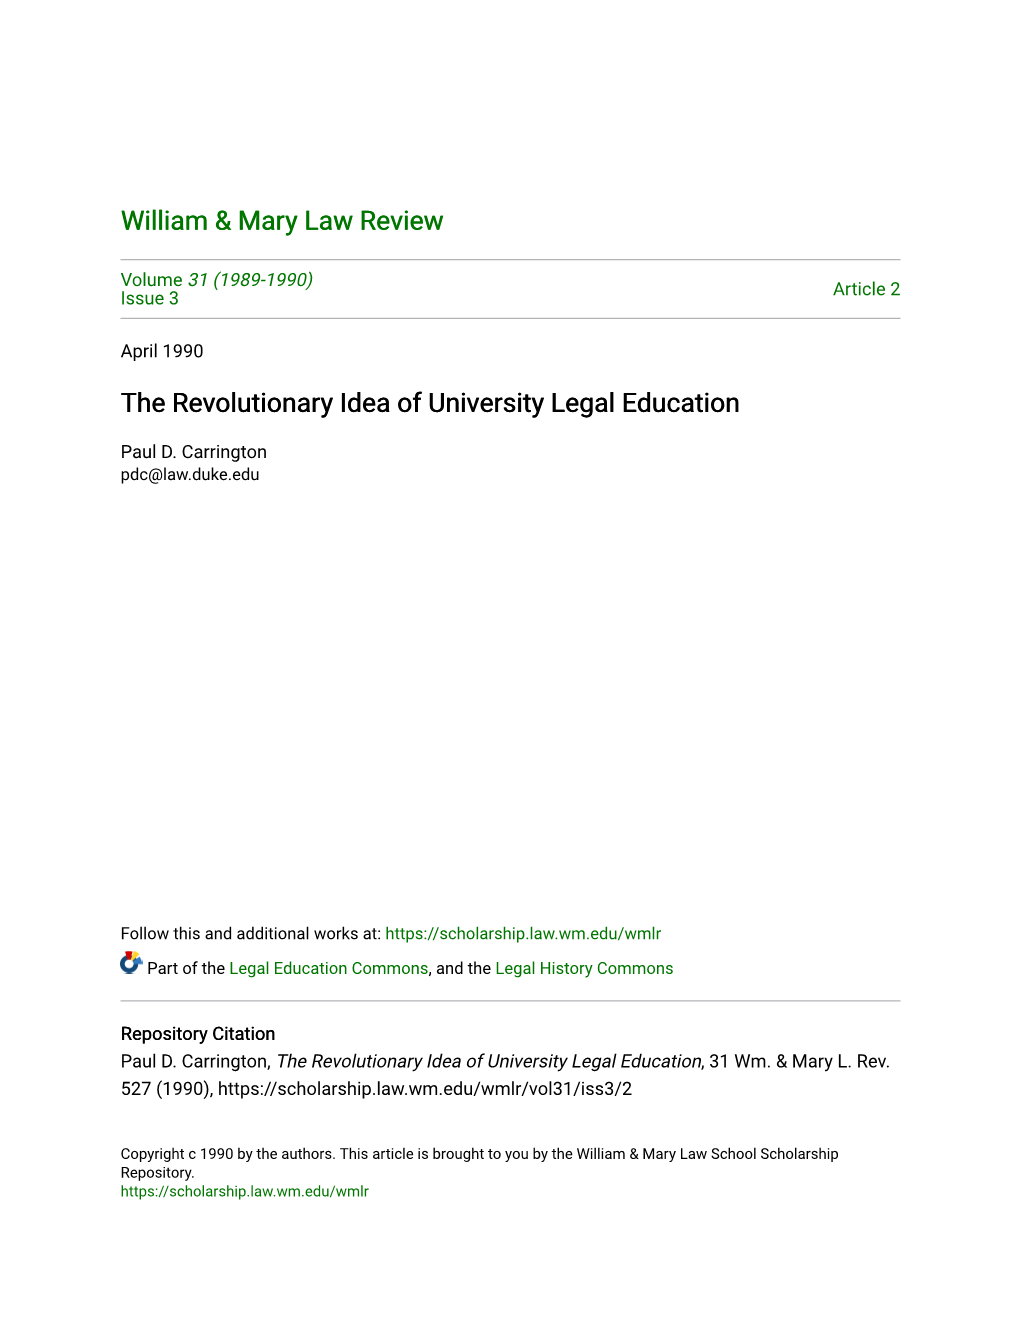 The Revolutionary Idea of University Legal Education